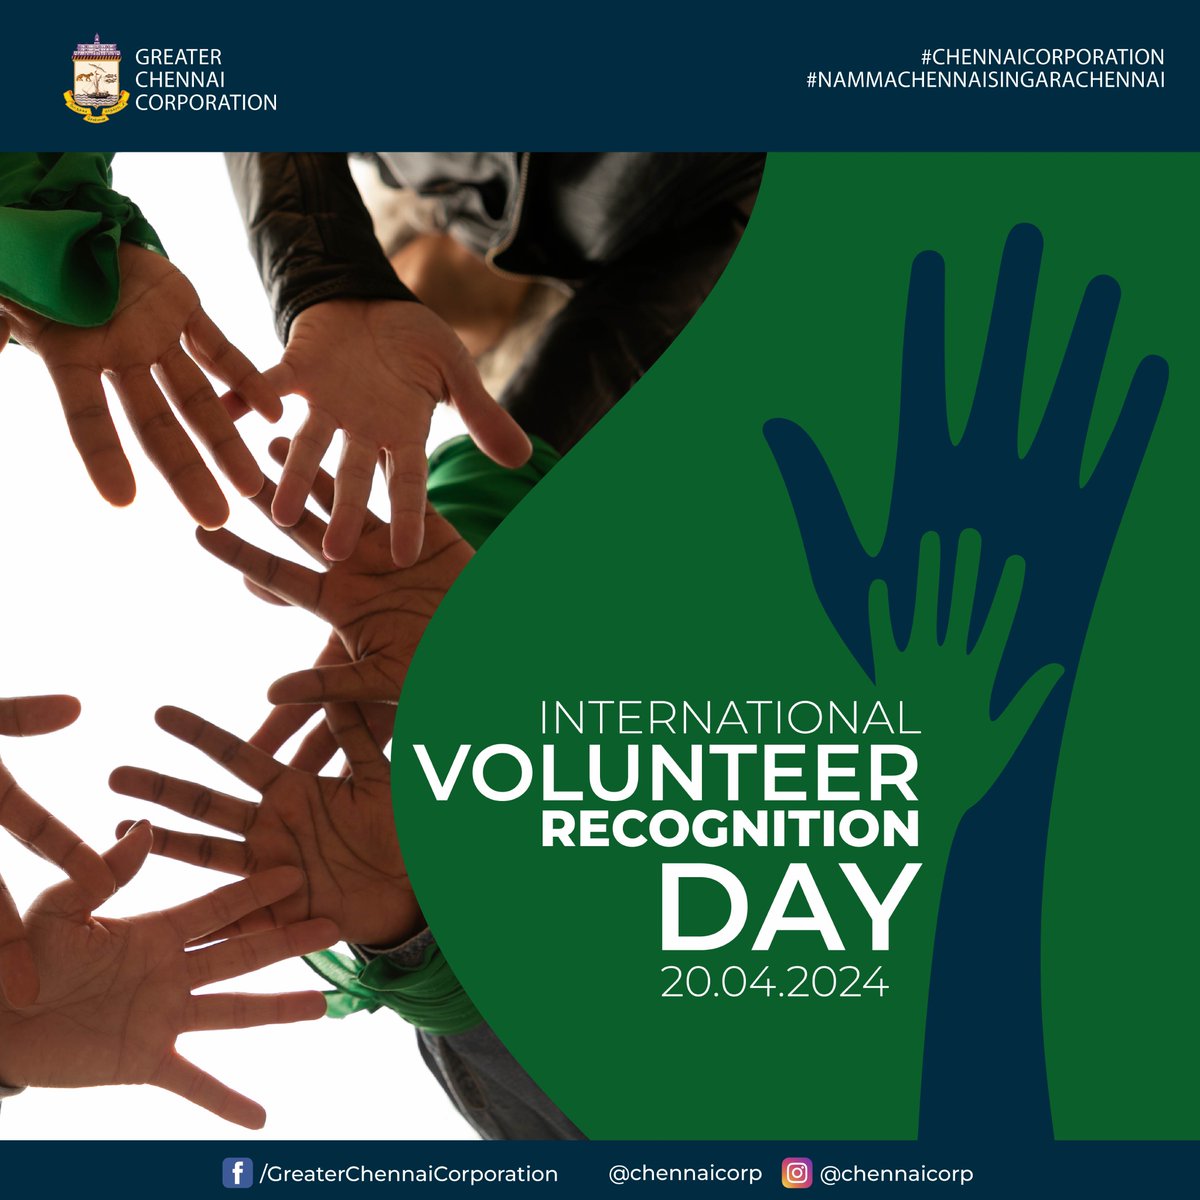 Dear #Chennaiites,

On International Volunteer Recognition Day, we thank all volunteers for their selfless dedication and inspiring contributions to communities worldwide!

@RAKRI1 
#ChennaiCorporation
#HeretoServe